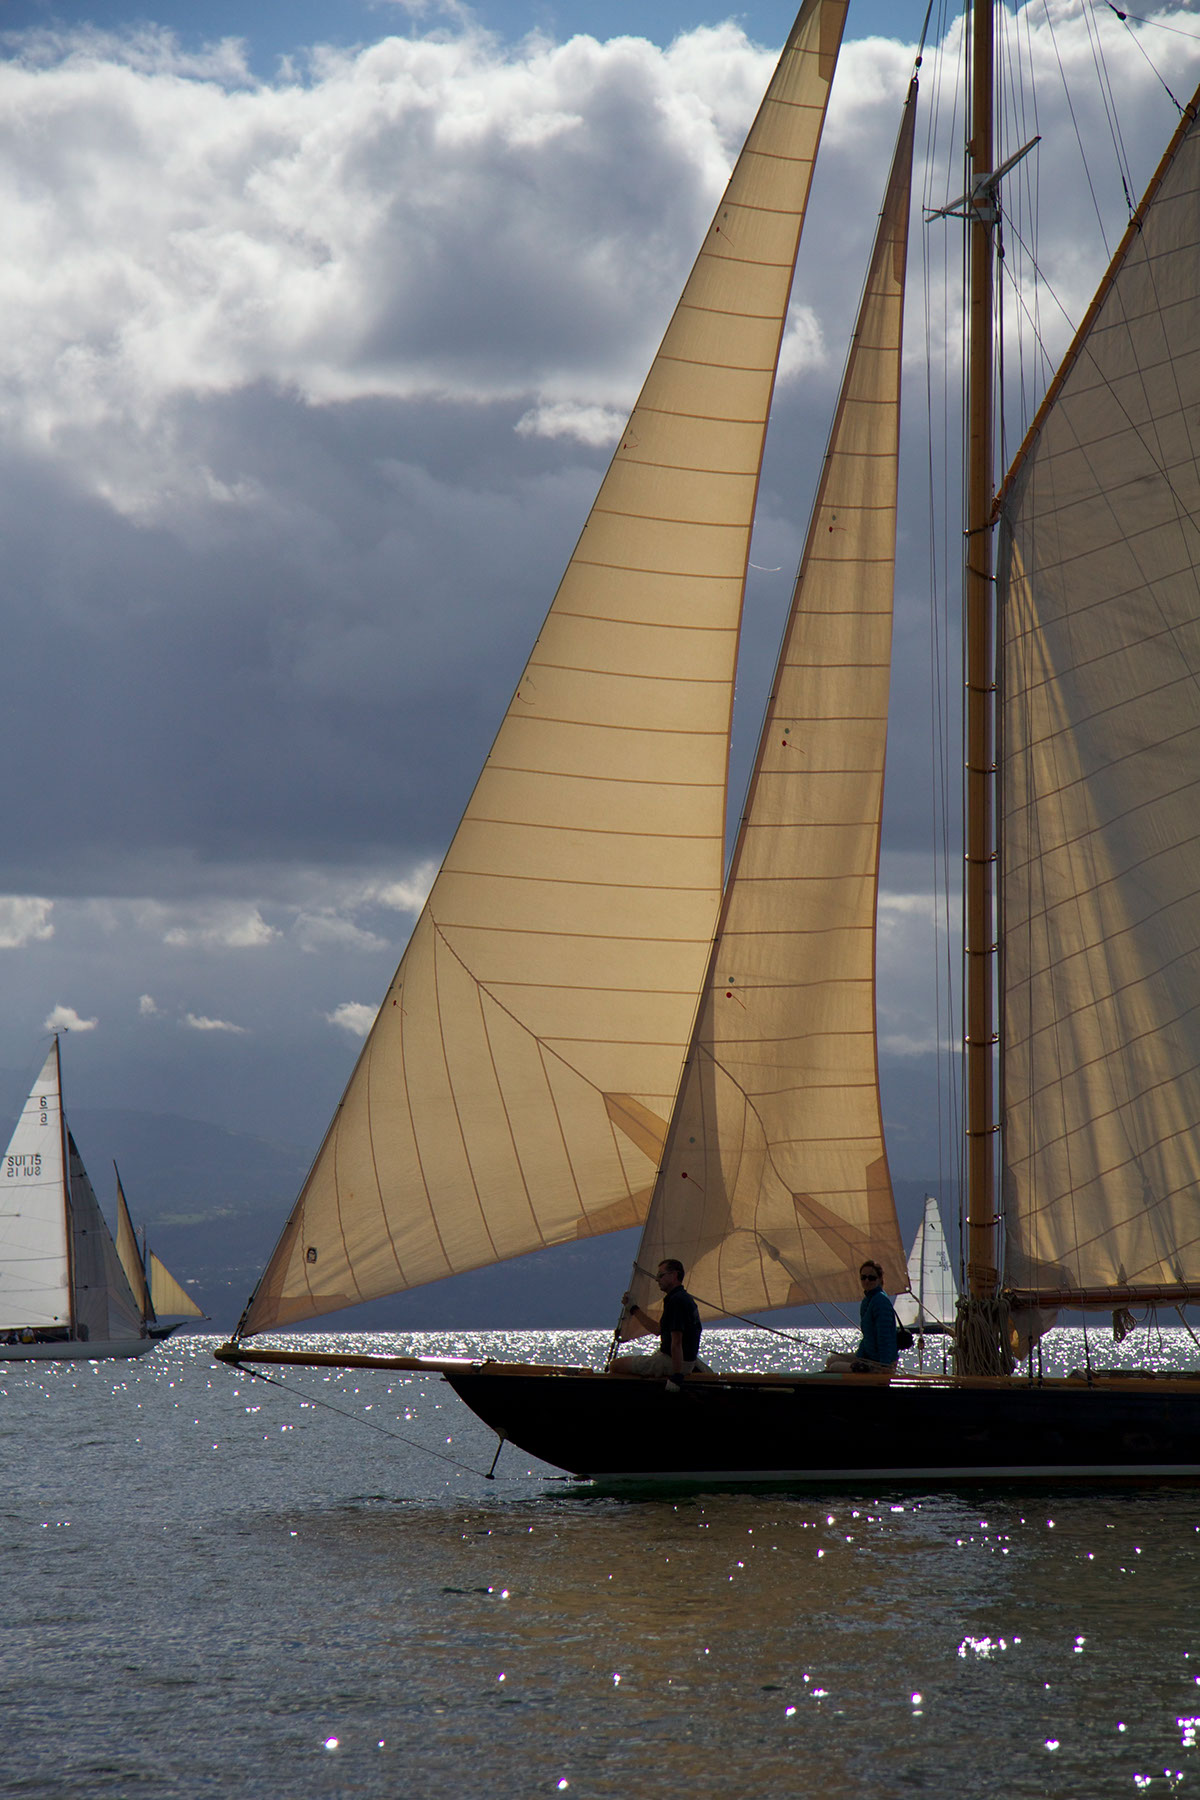 marine sailboats winch regatta Sui wind Boats marine photography vintage photography sepia photography